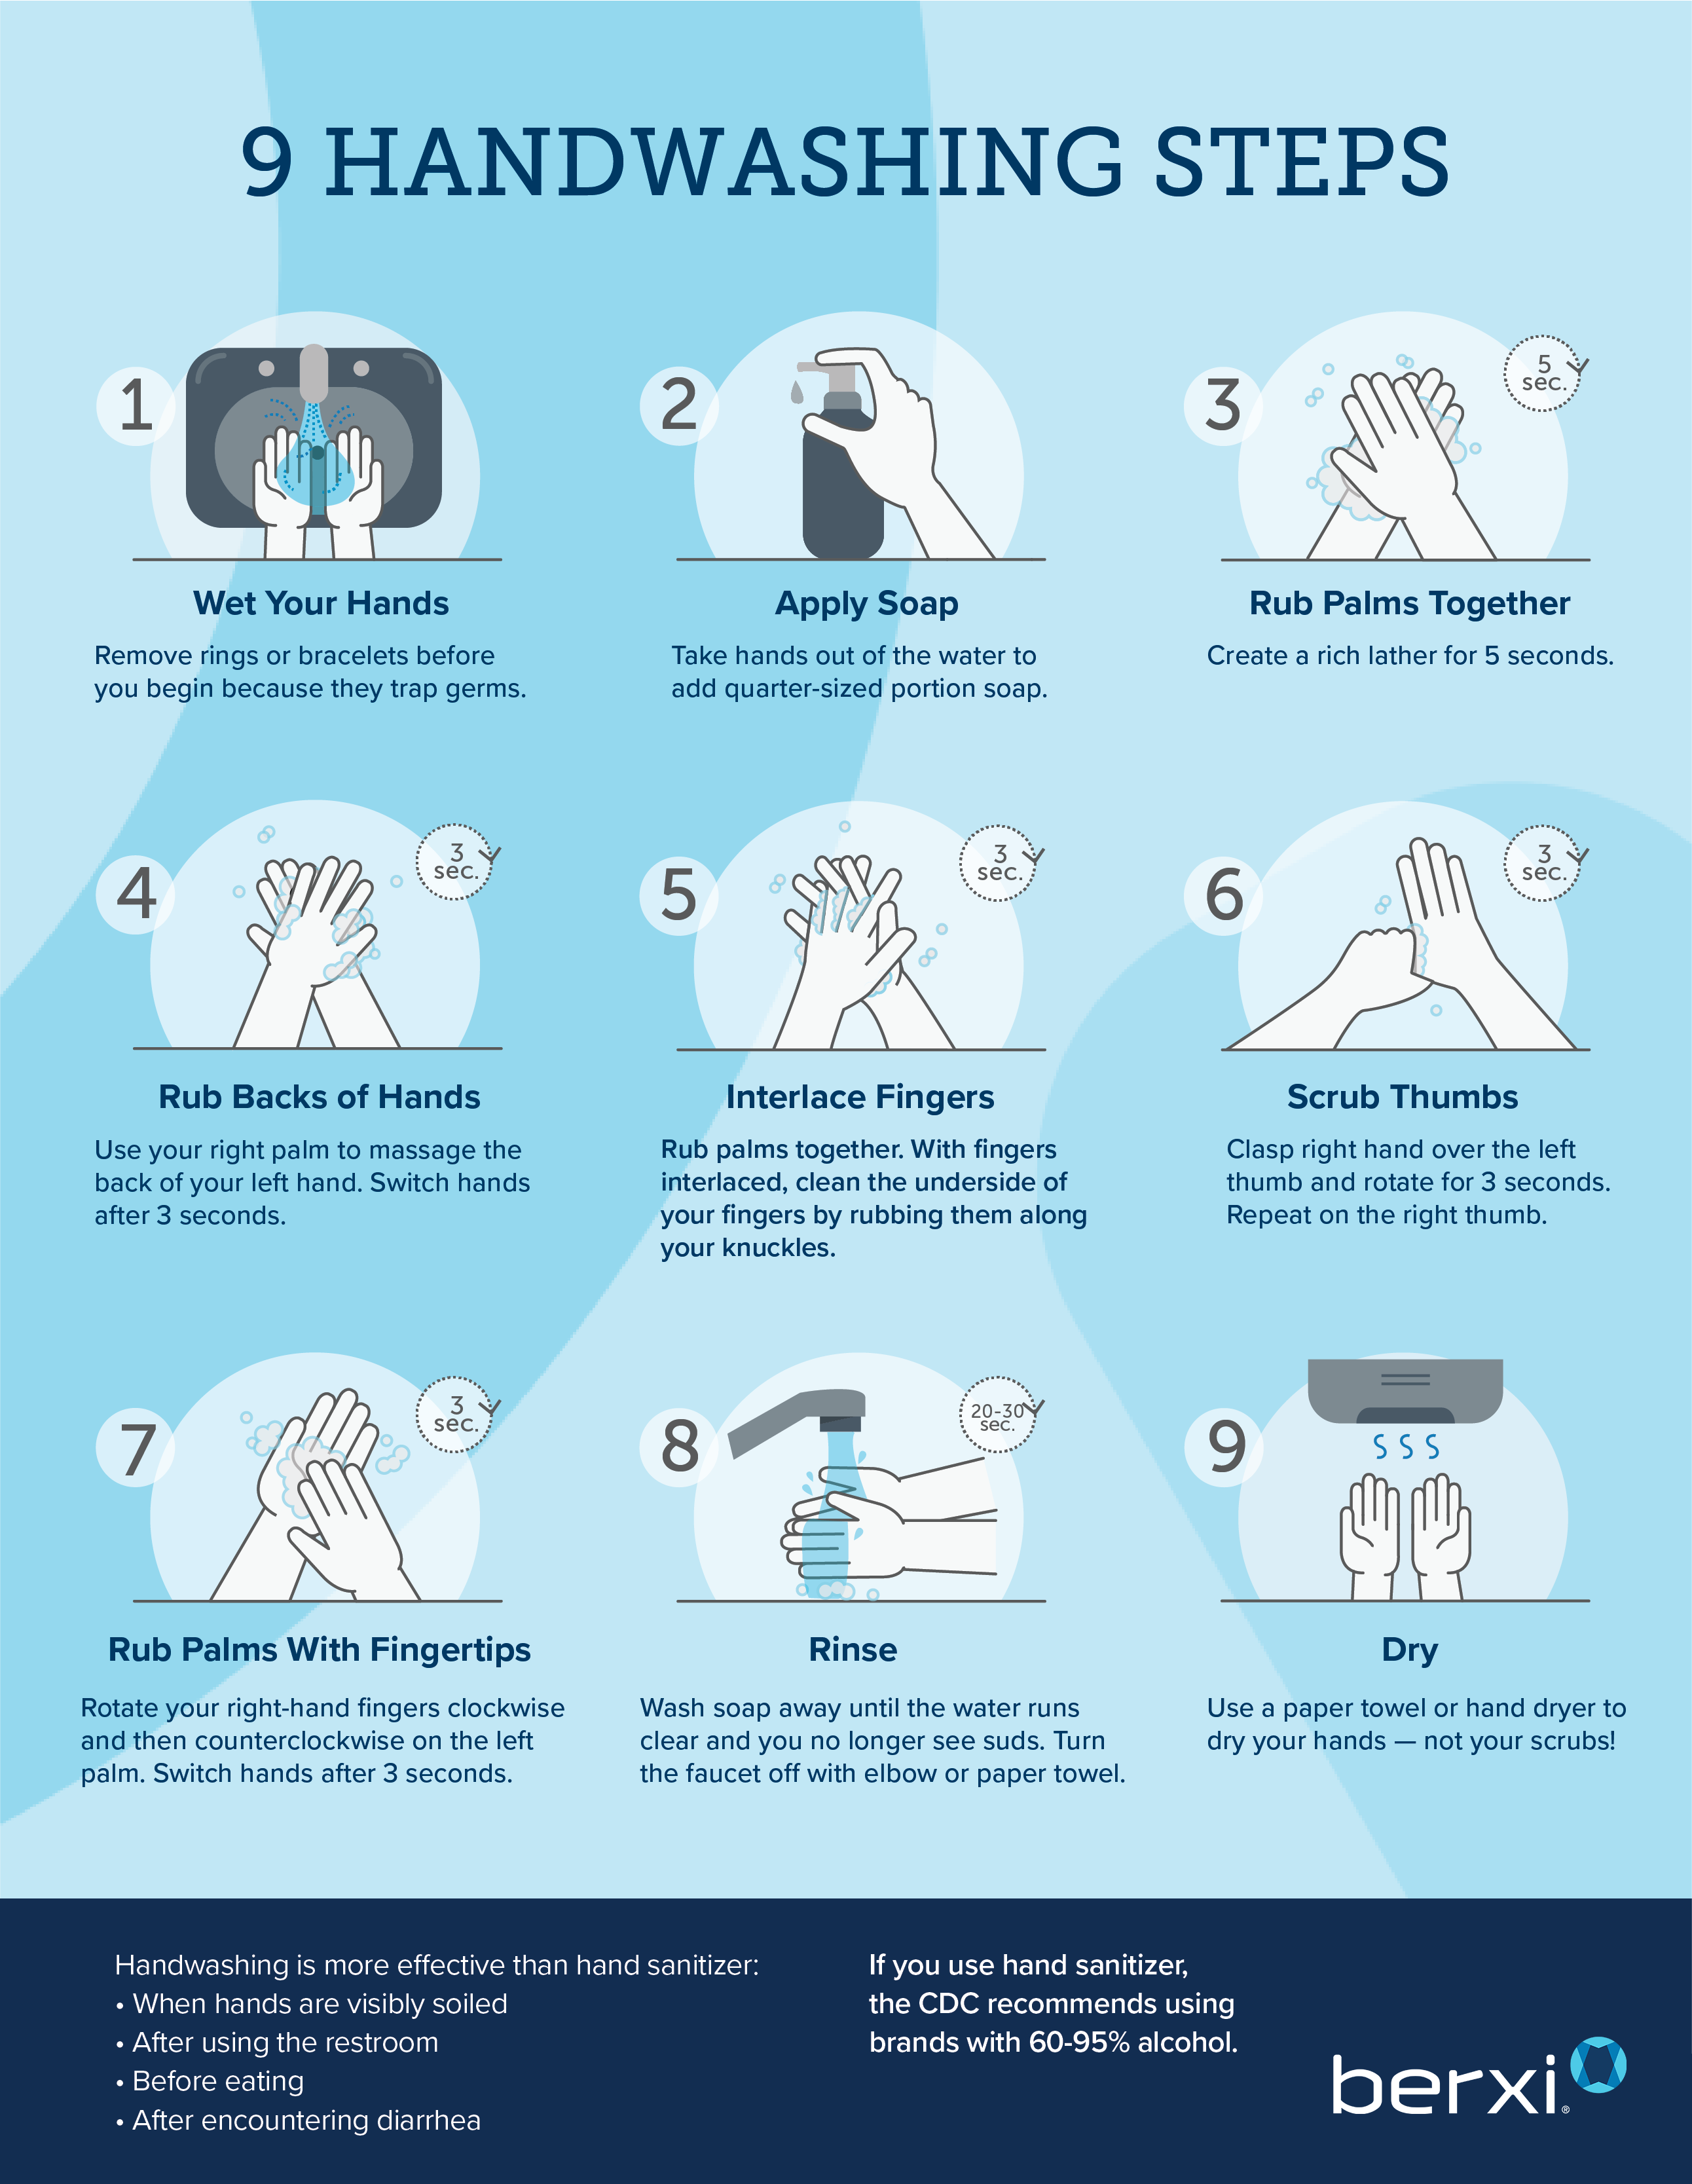 Handwashing Basics and Tips